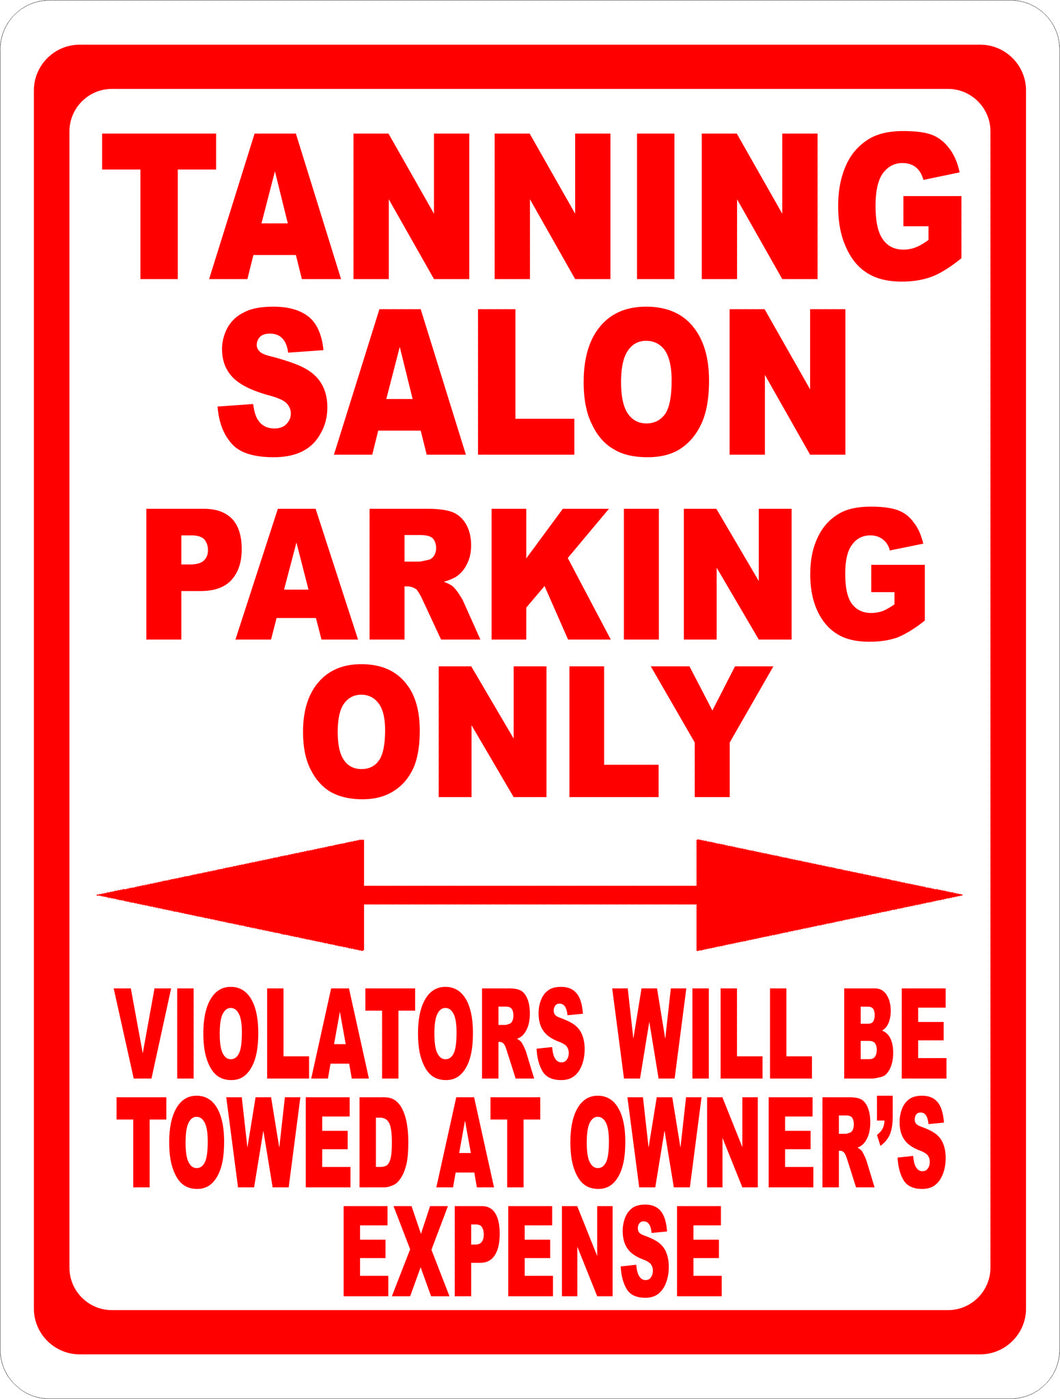 Tanning Salon Parking Sign